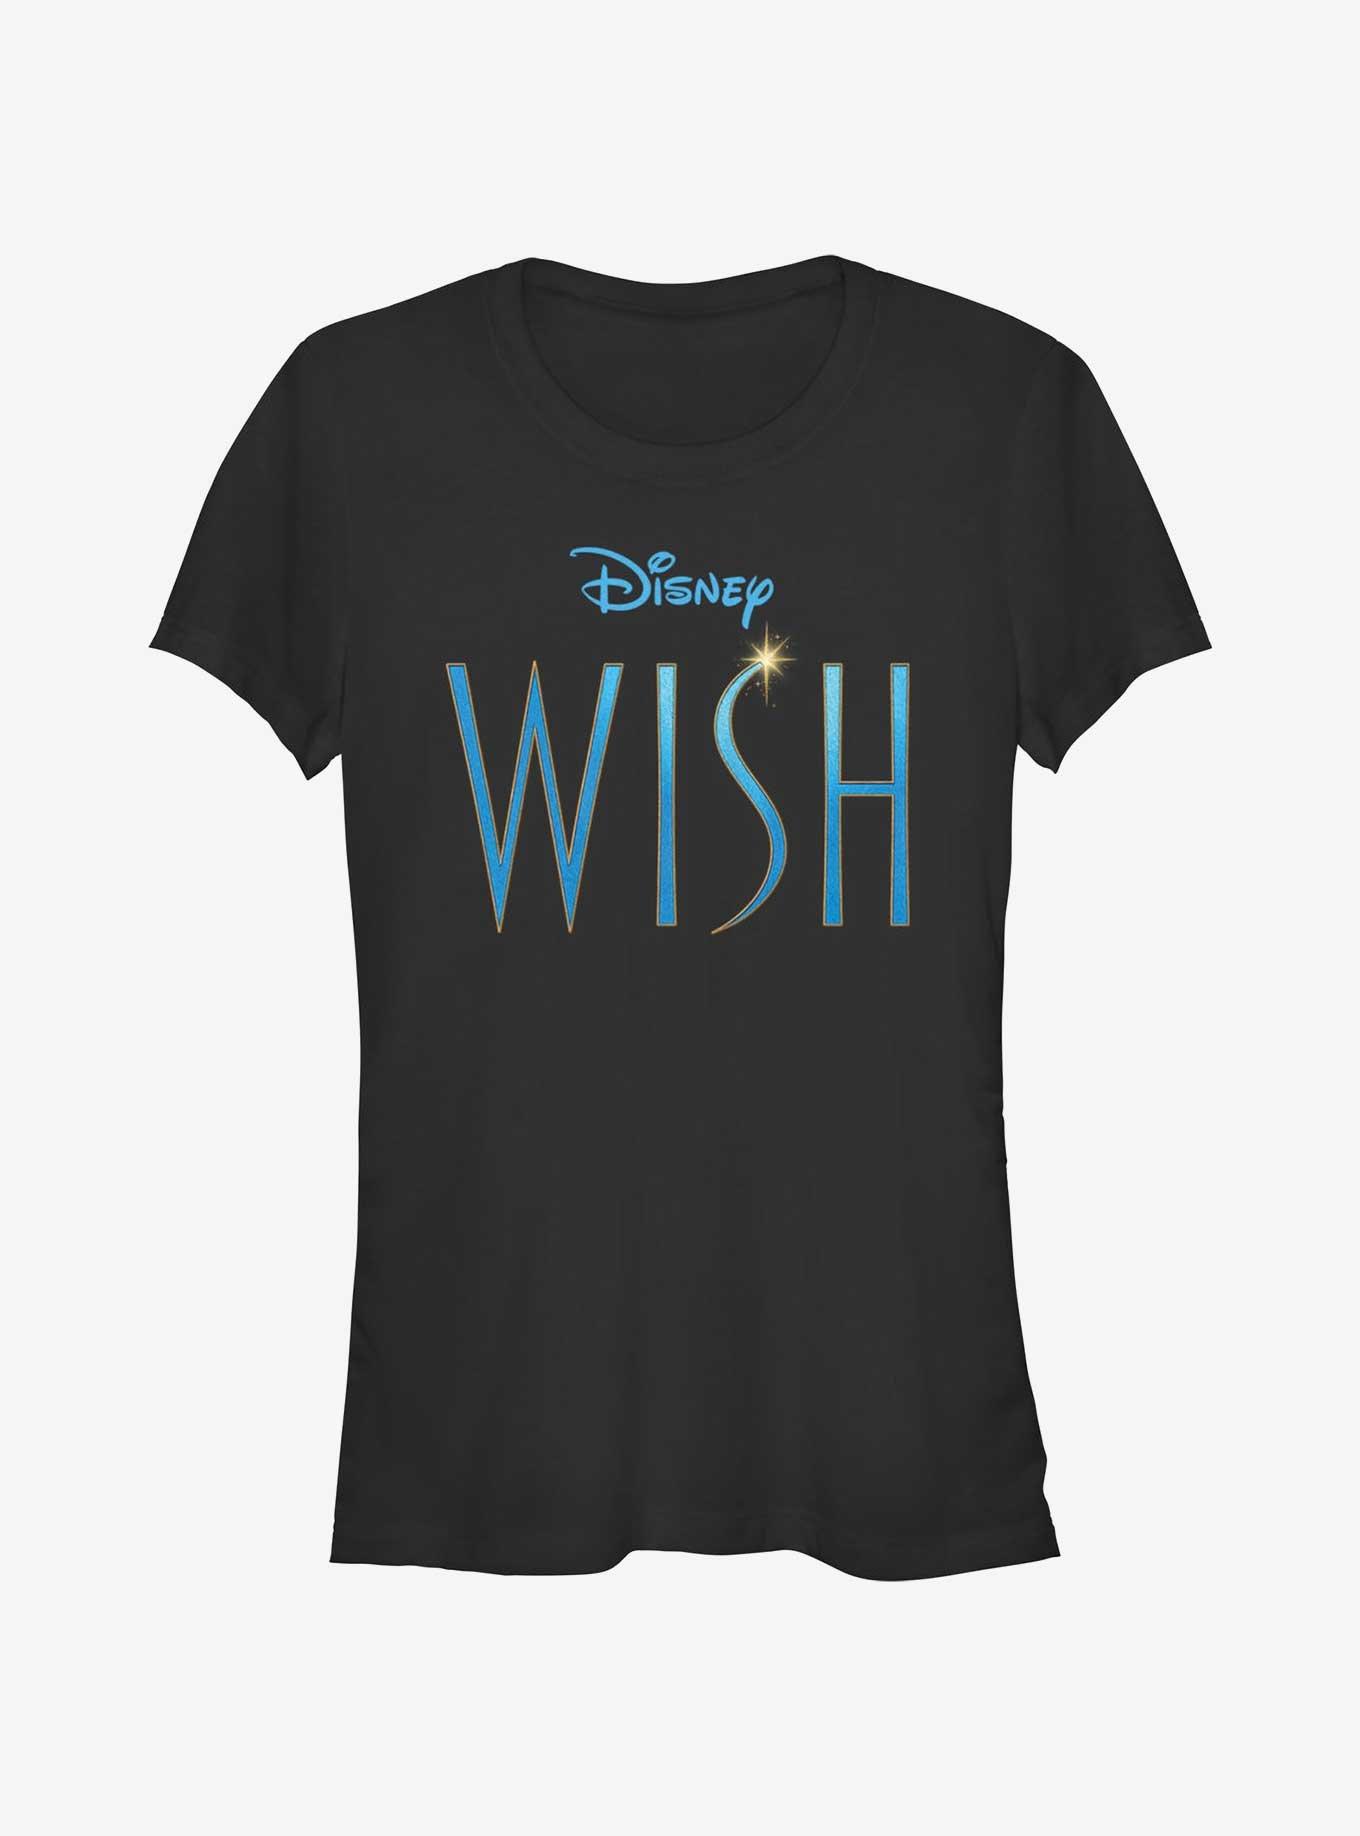 Disney Wish Movie Logo Girls T-Shirt